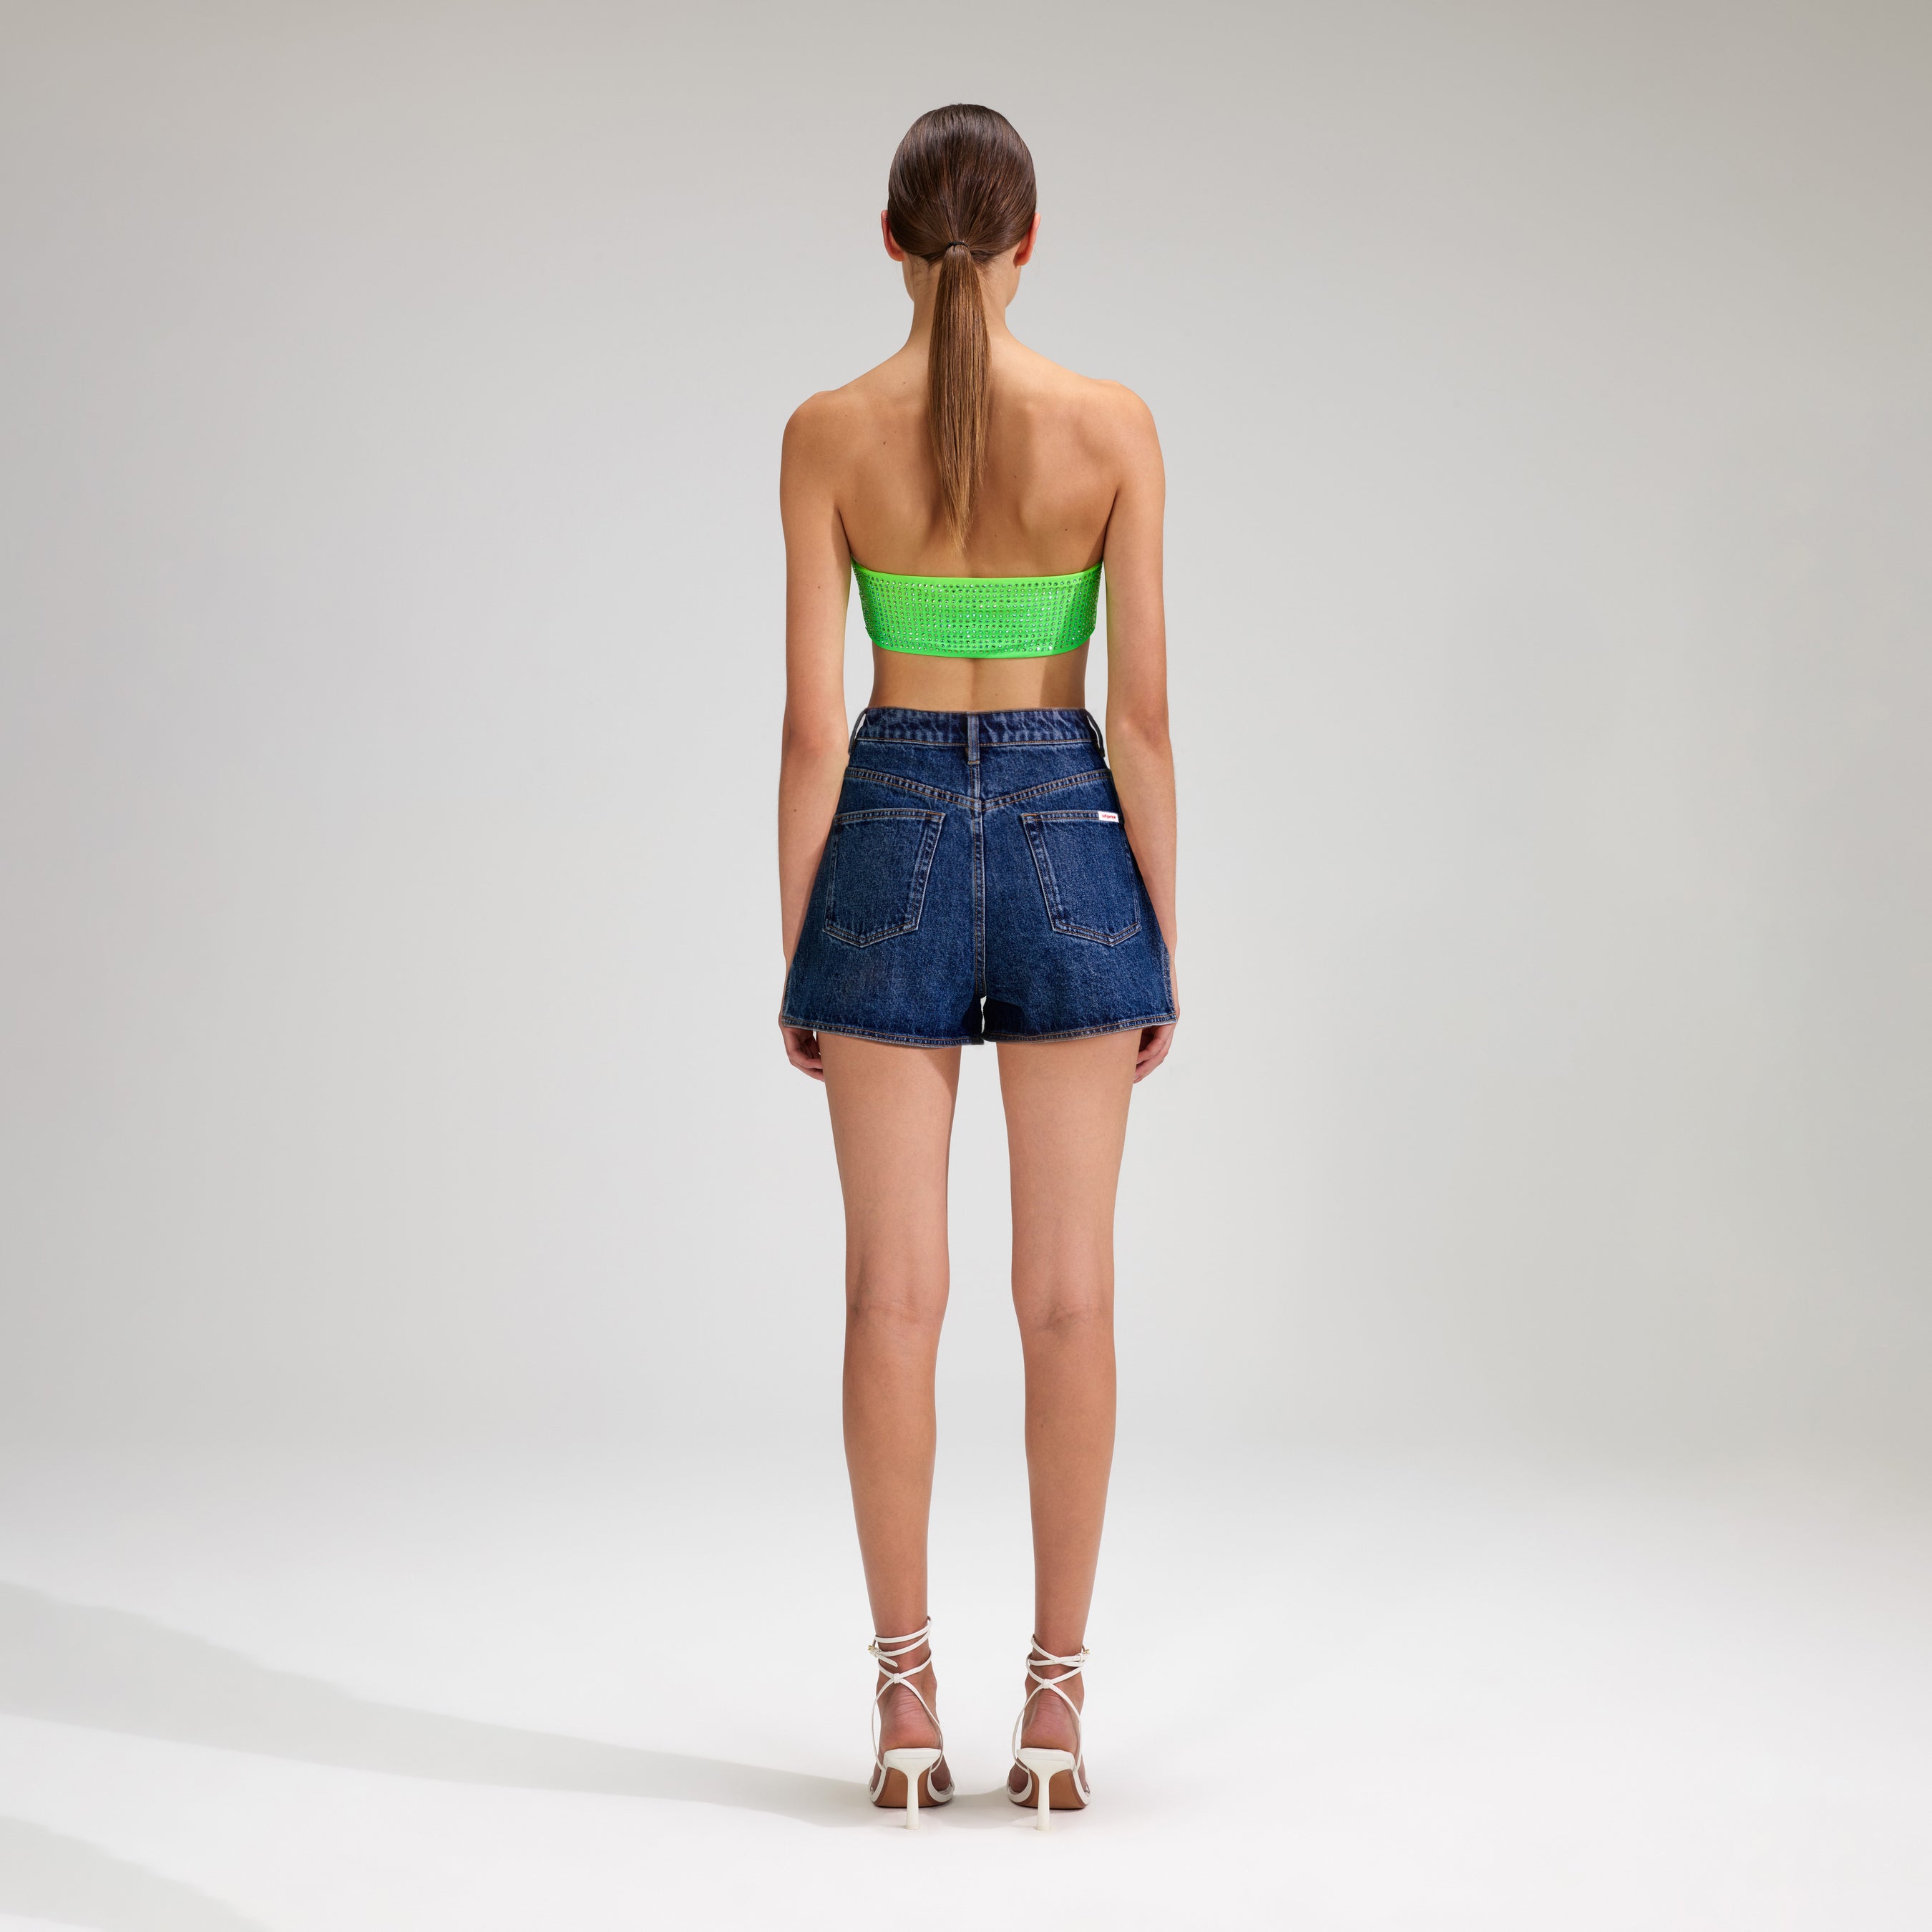 Green Rhinestone Bandeau Bikini Top